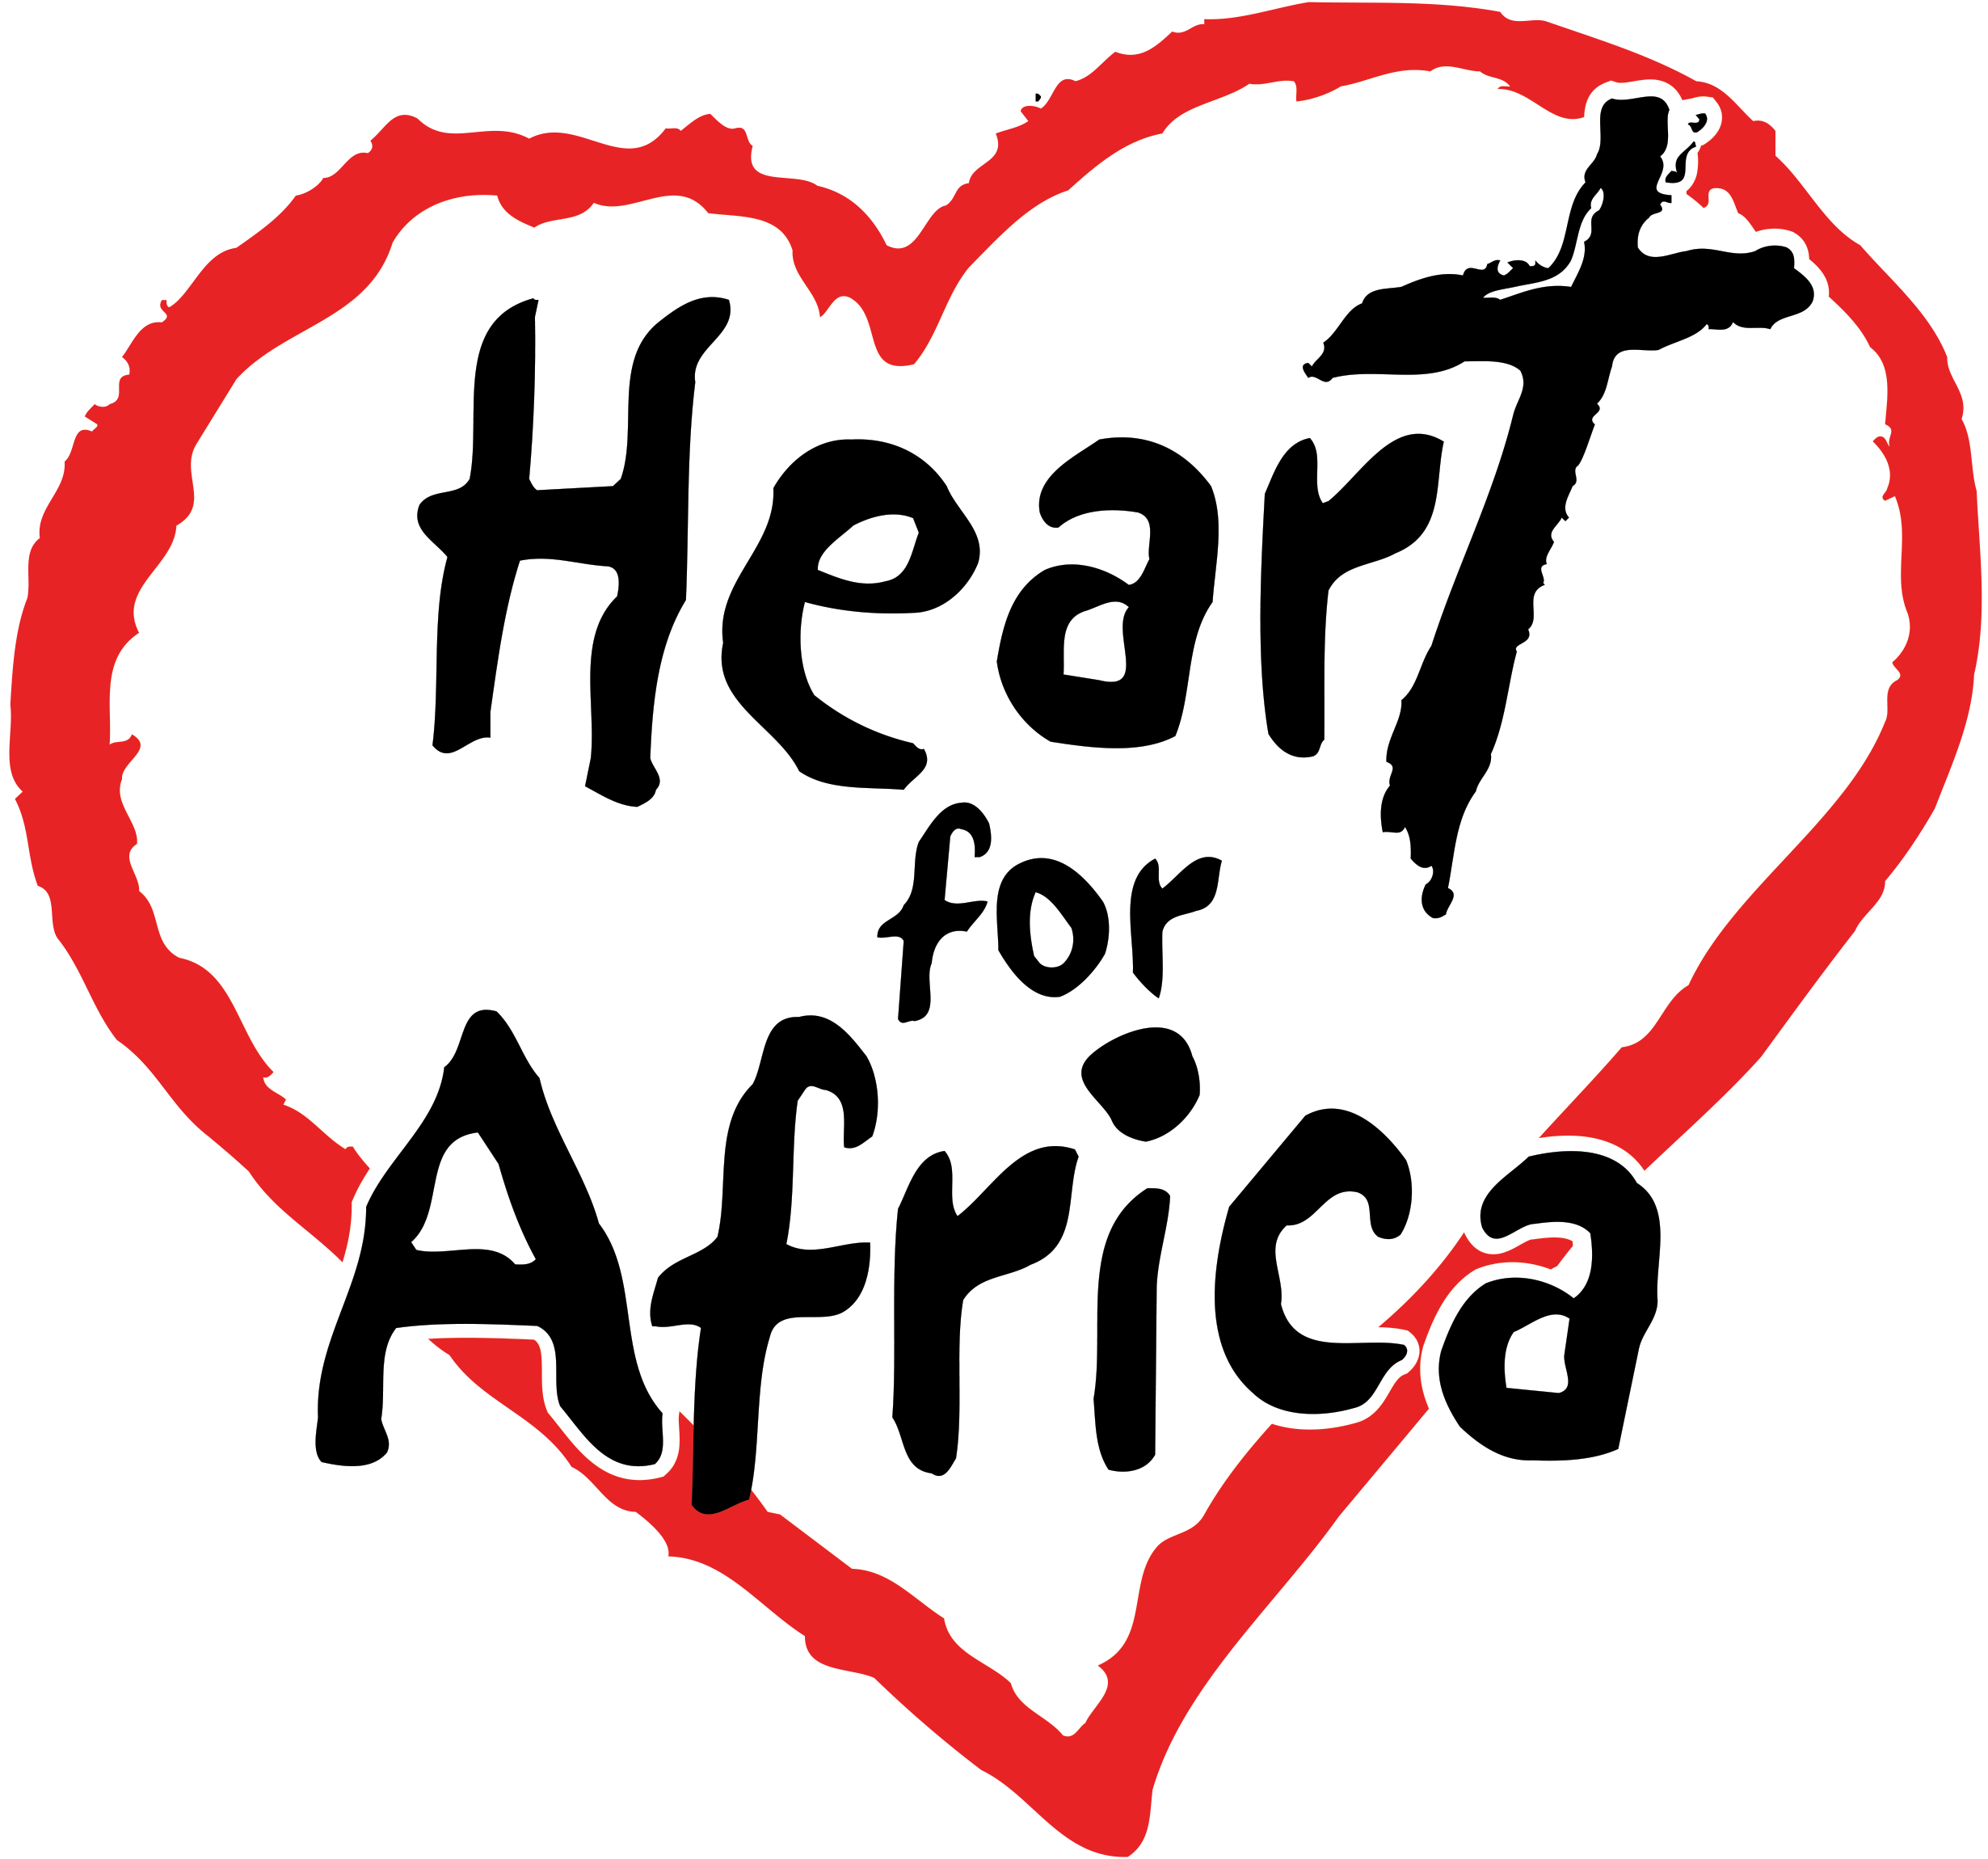 Heart for Africa